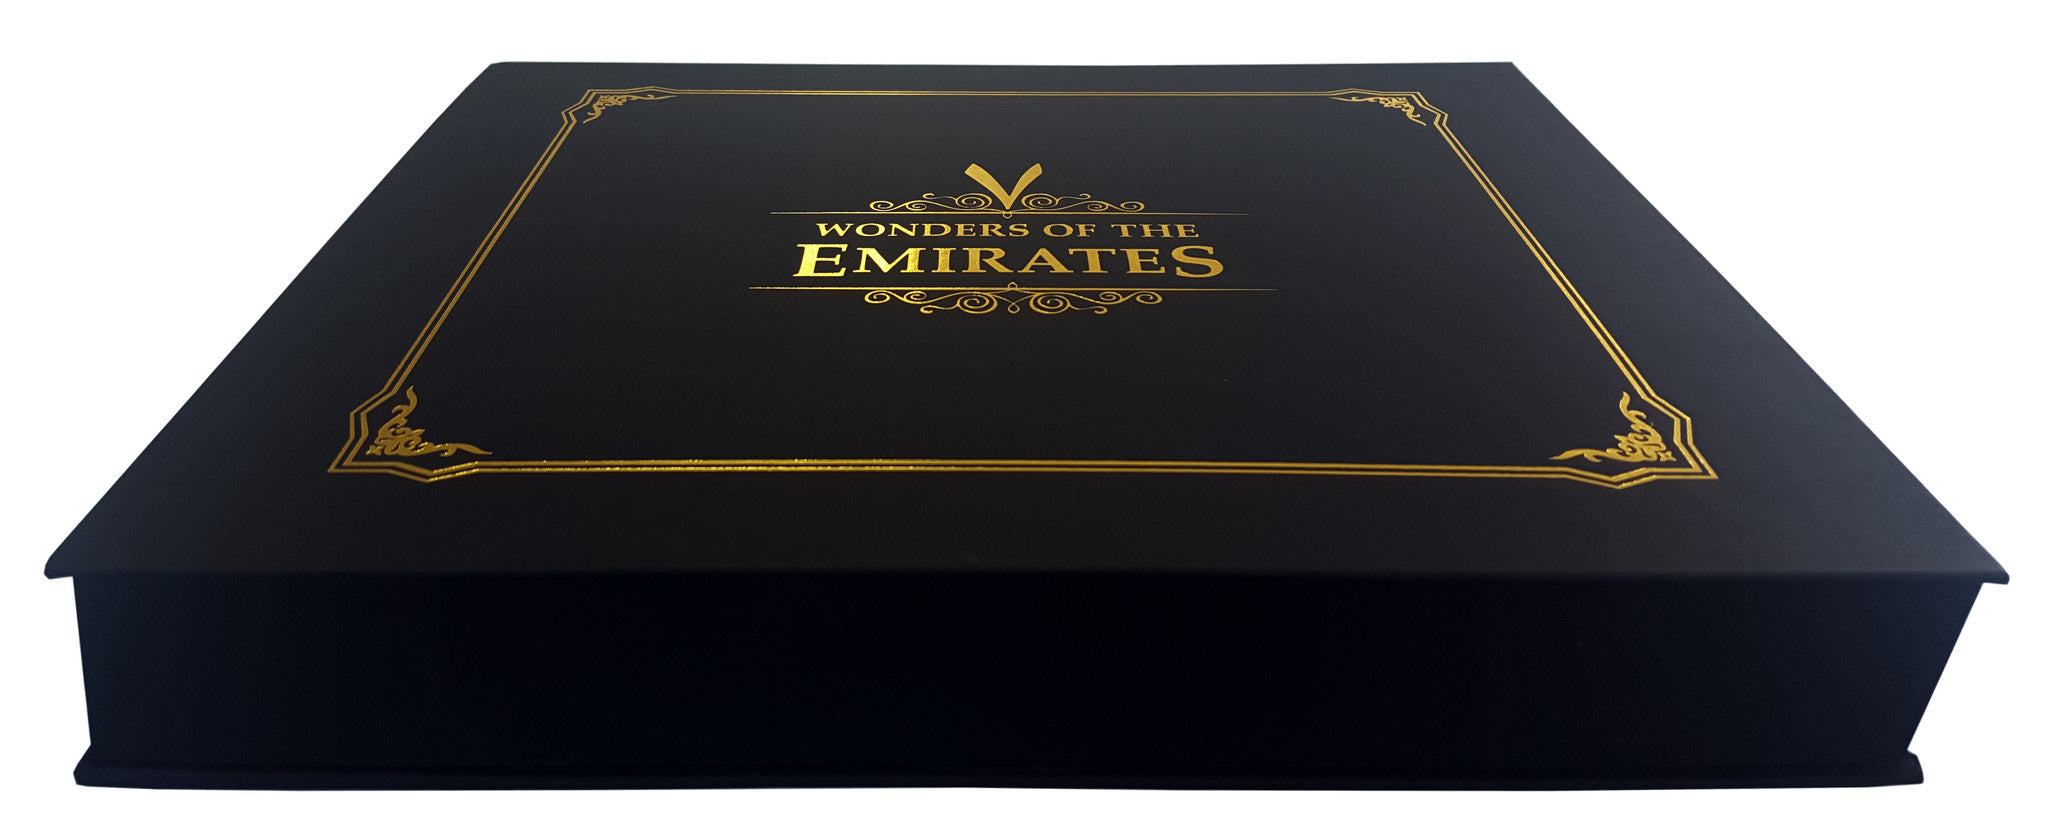 7 Wonders of the Emirates